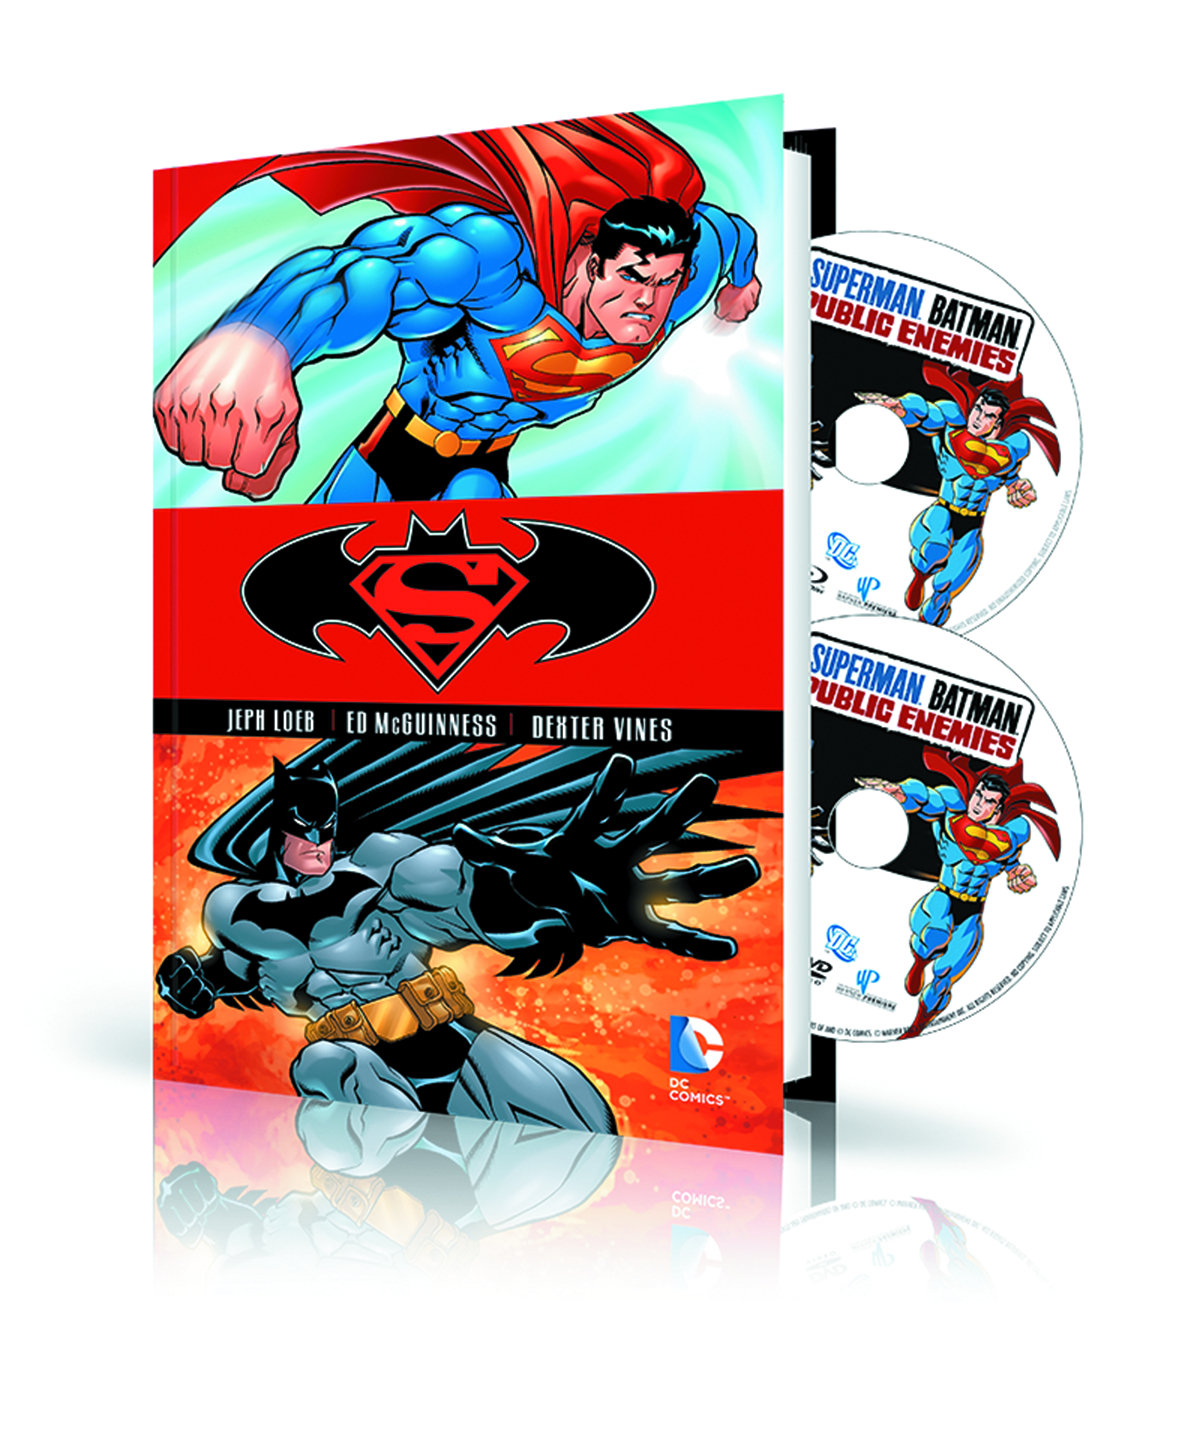 SUPERMAN BATMAN VOL 1 HC BOOK & DVD BLU RAY SET